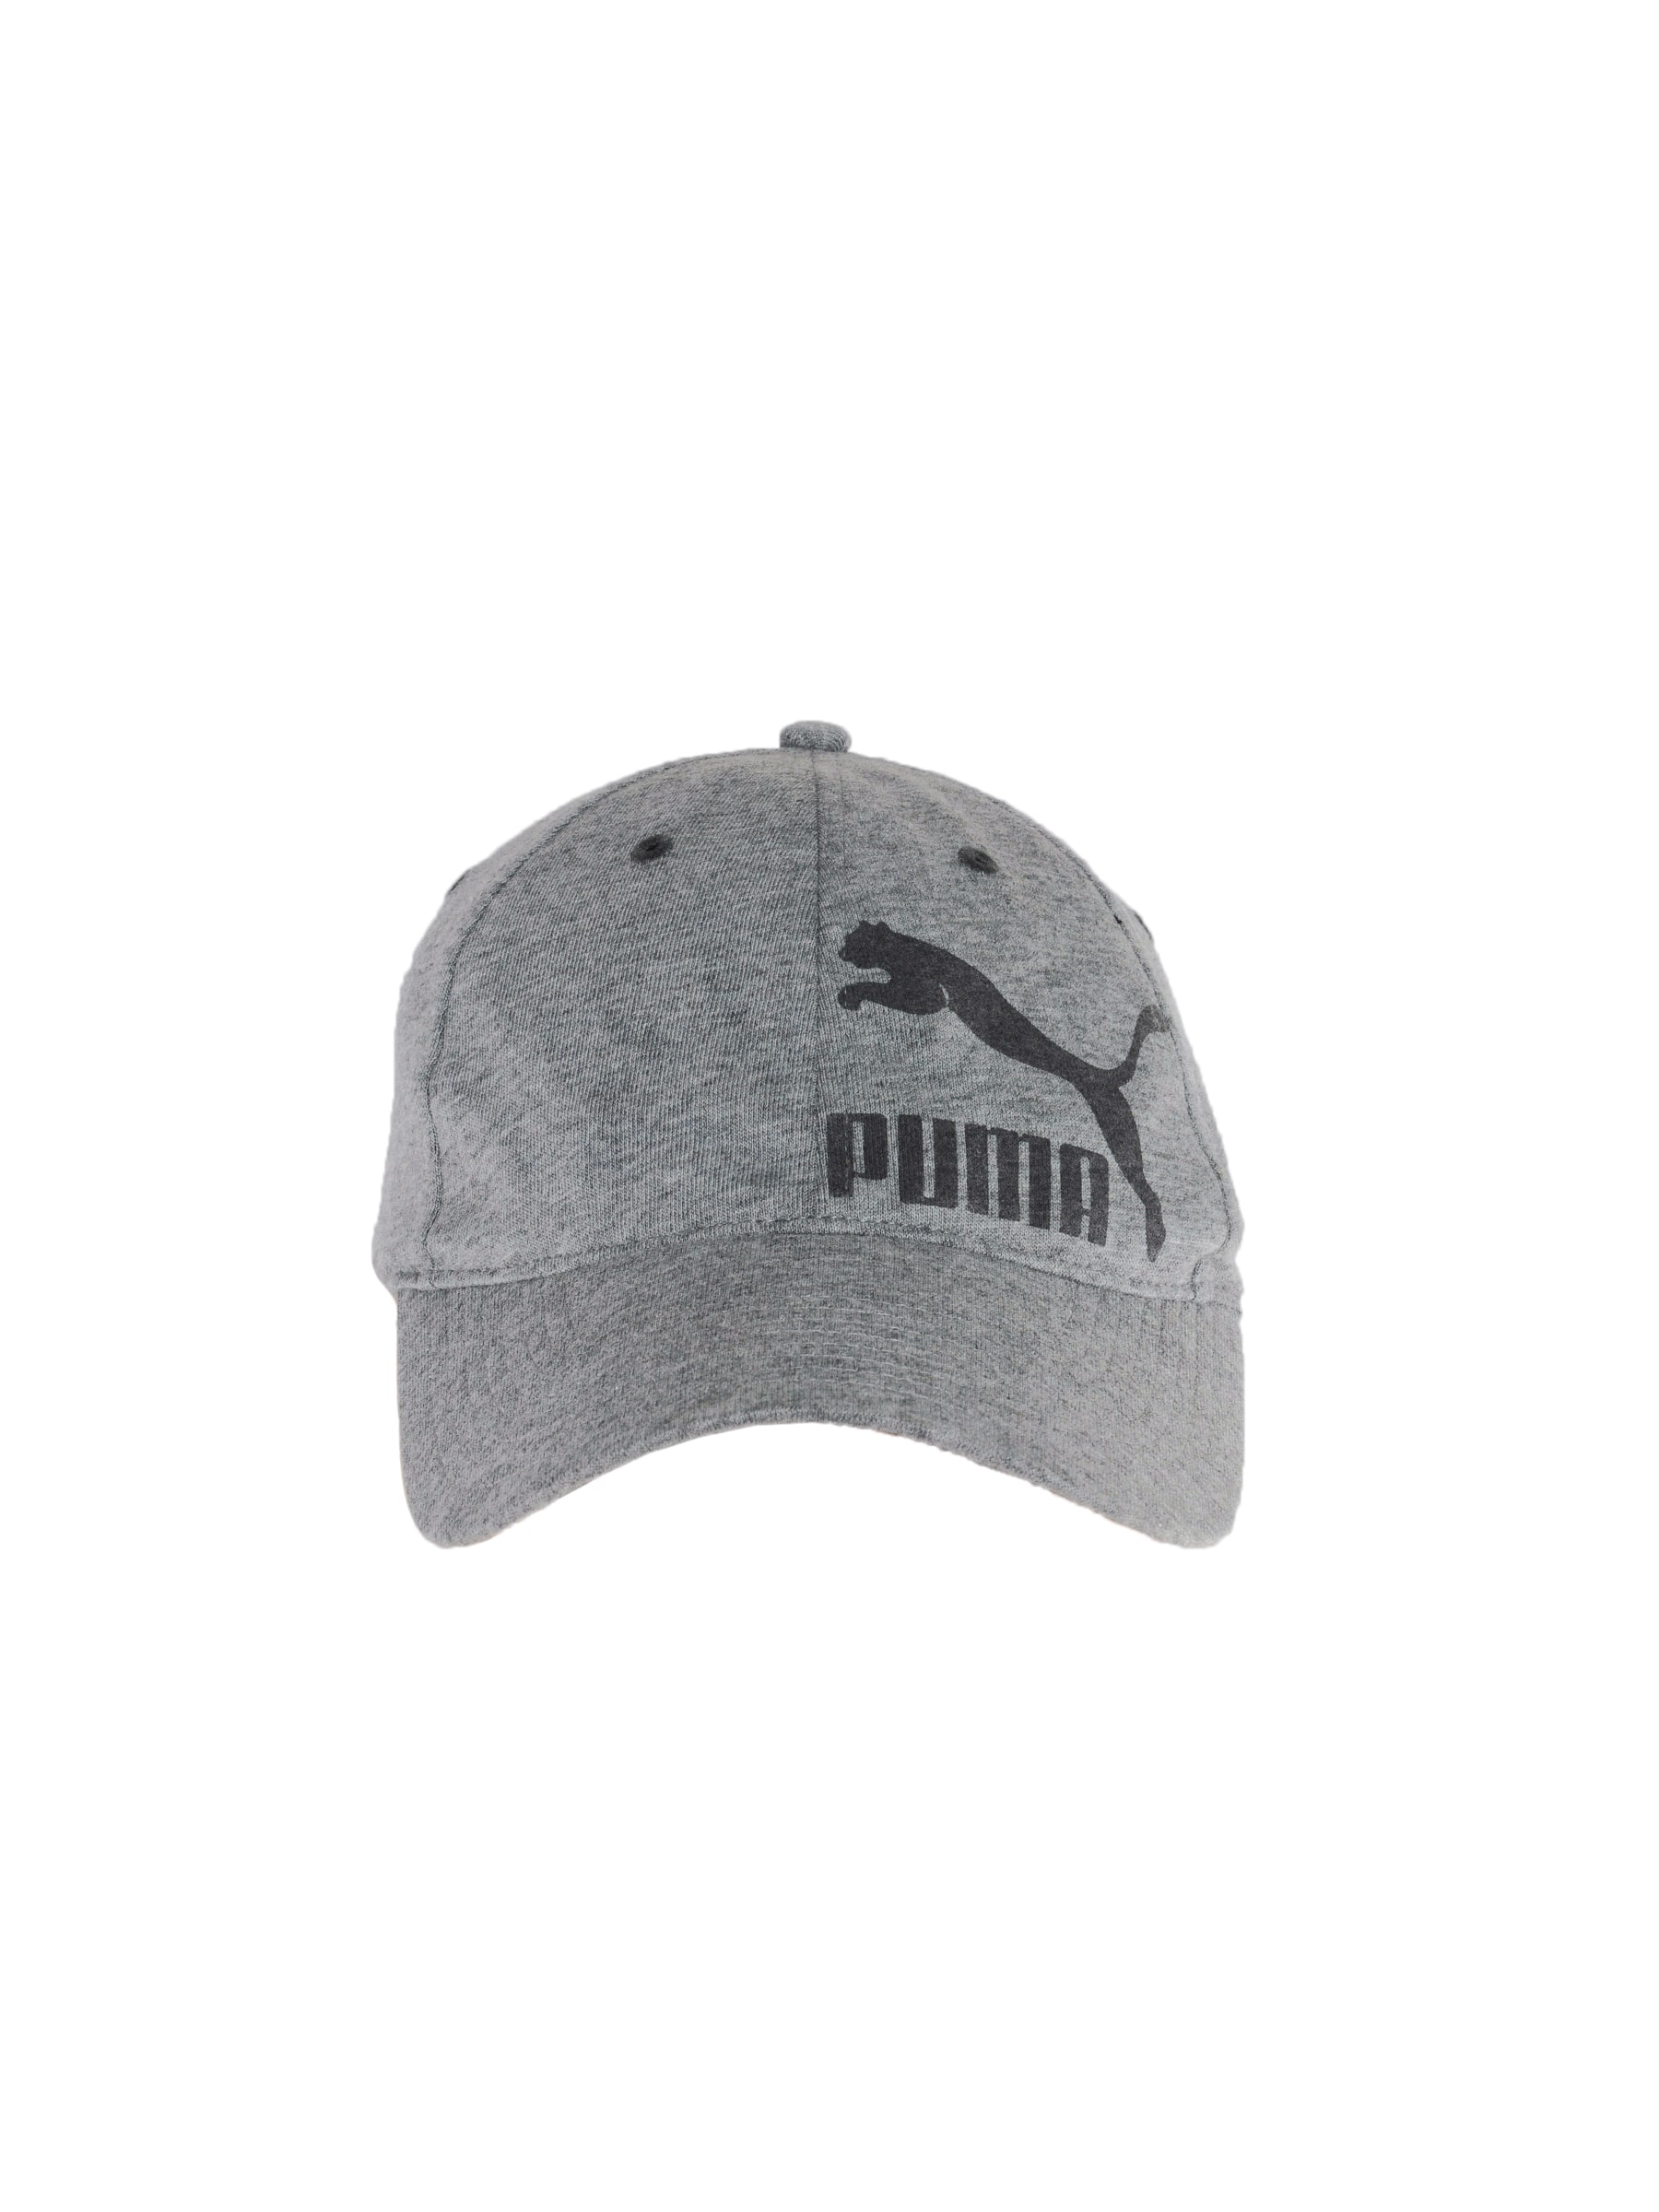 Puma Unisex Heather Grey Cap